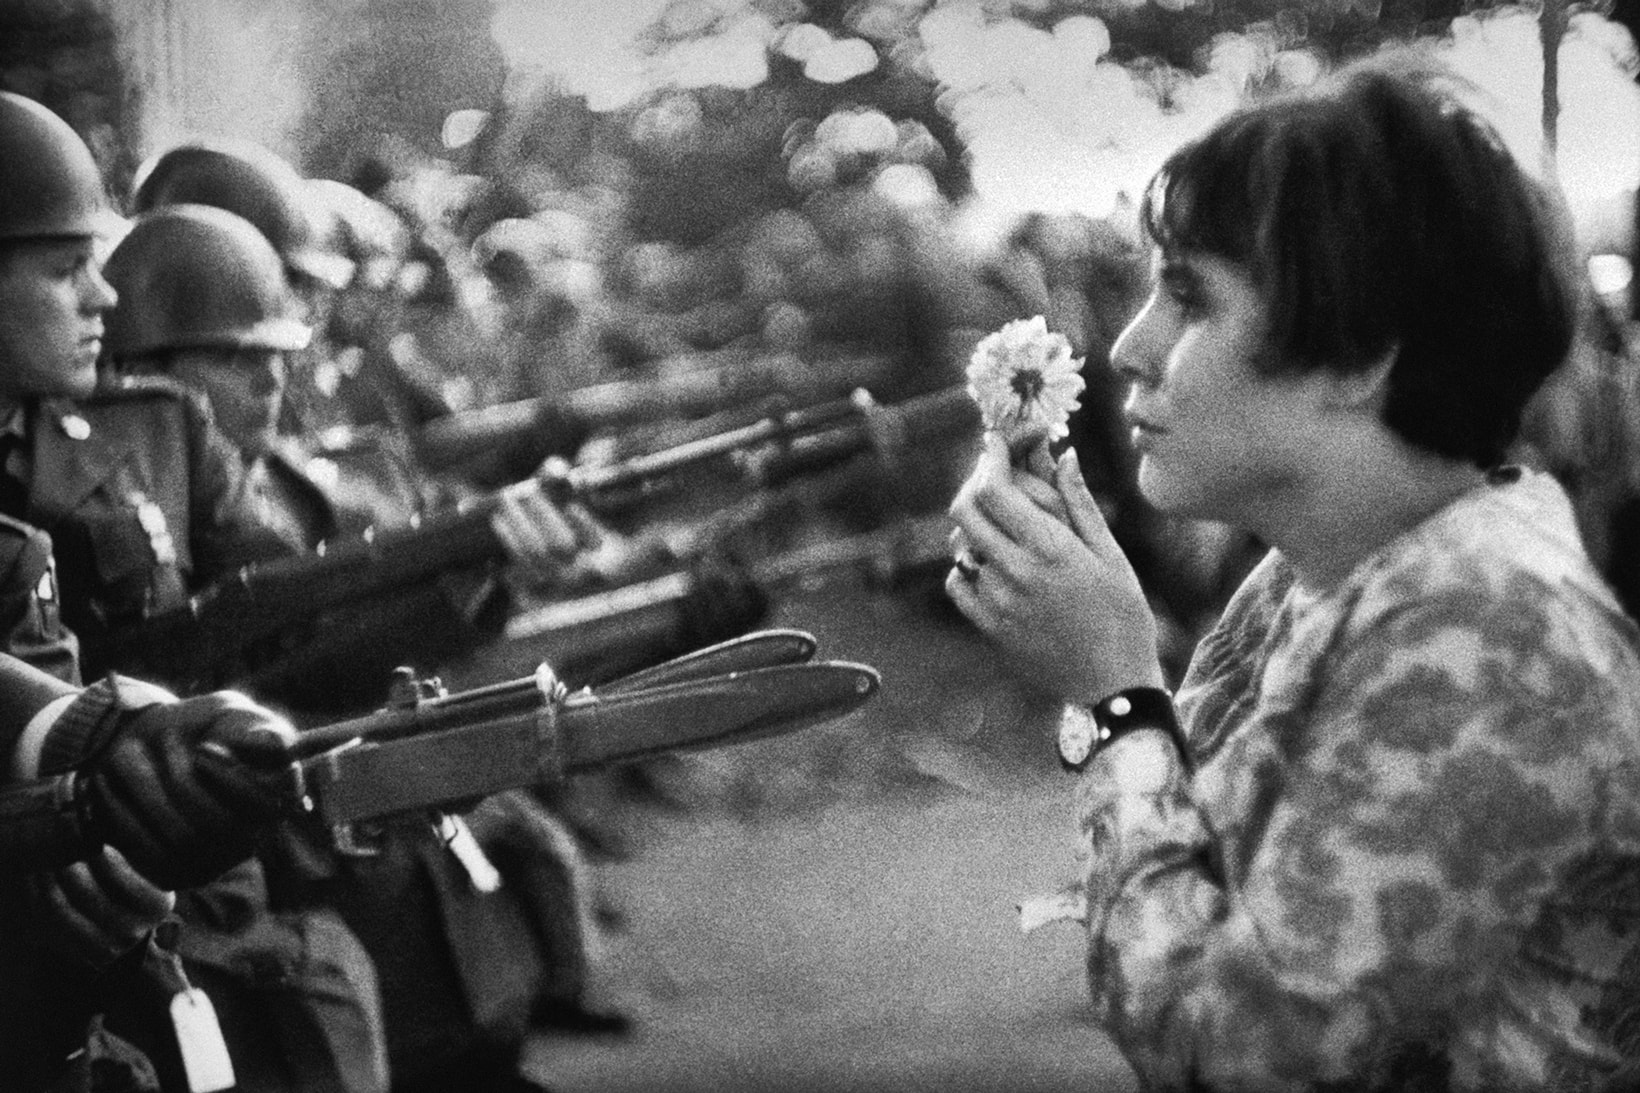 azuma makoto magnum photos war and flowers exhibition photography artworks